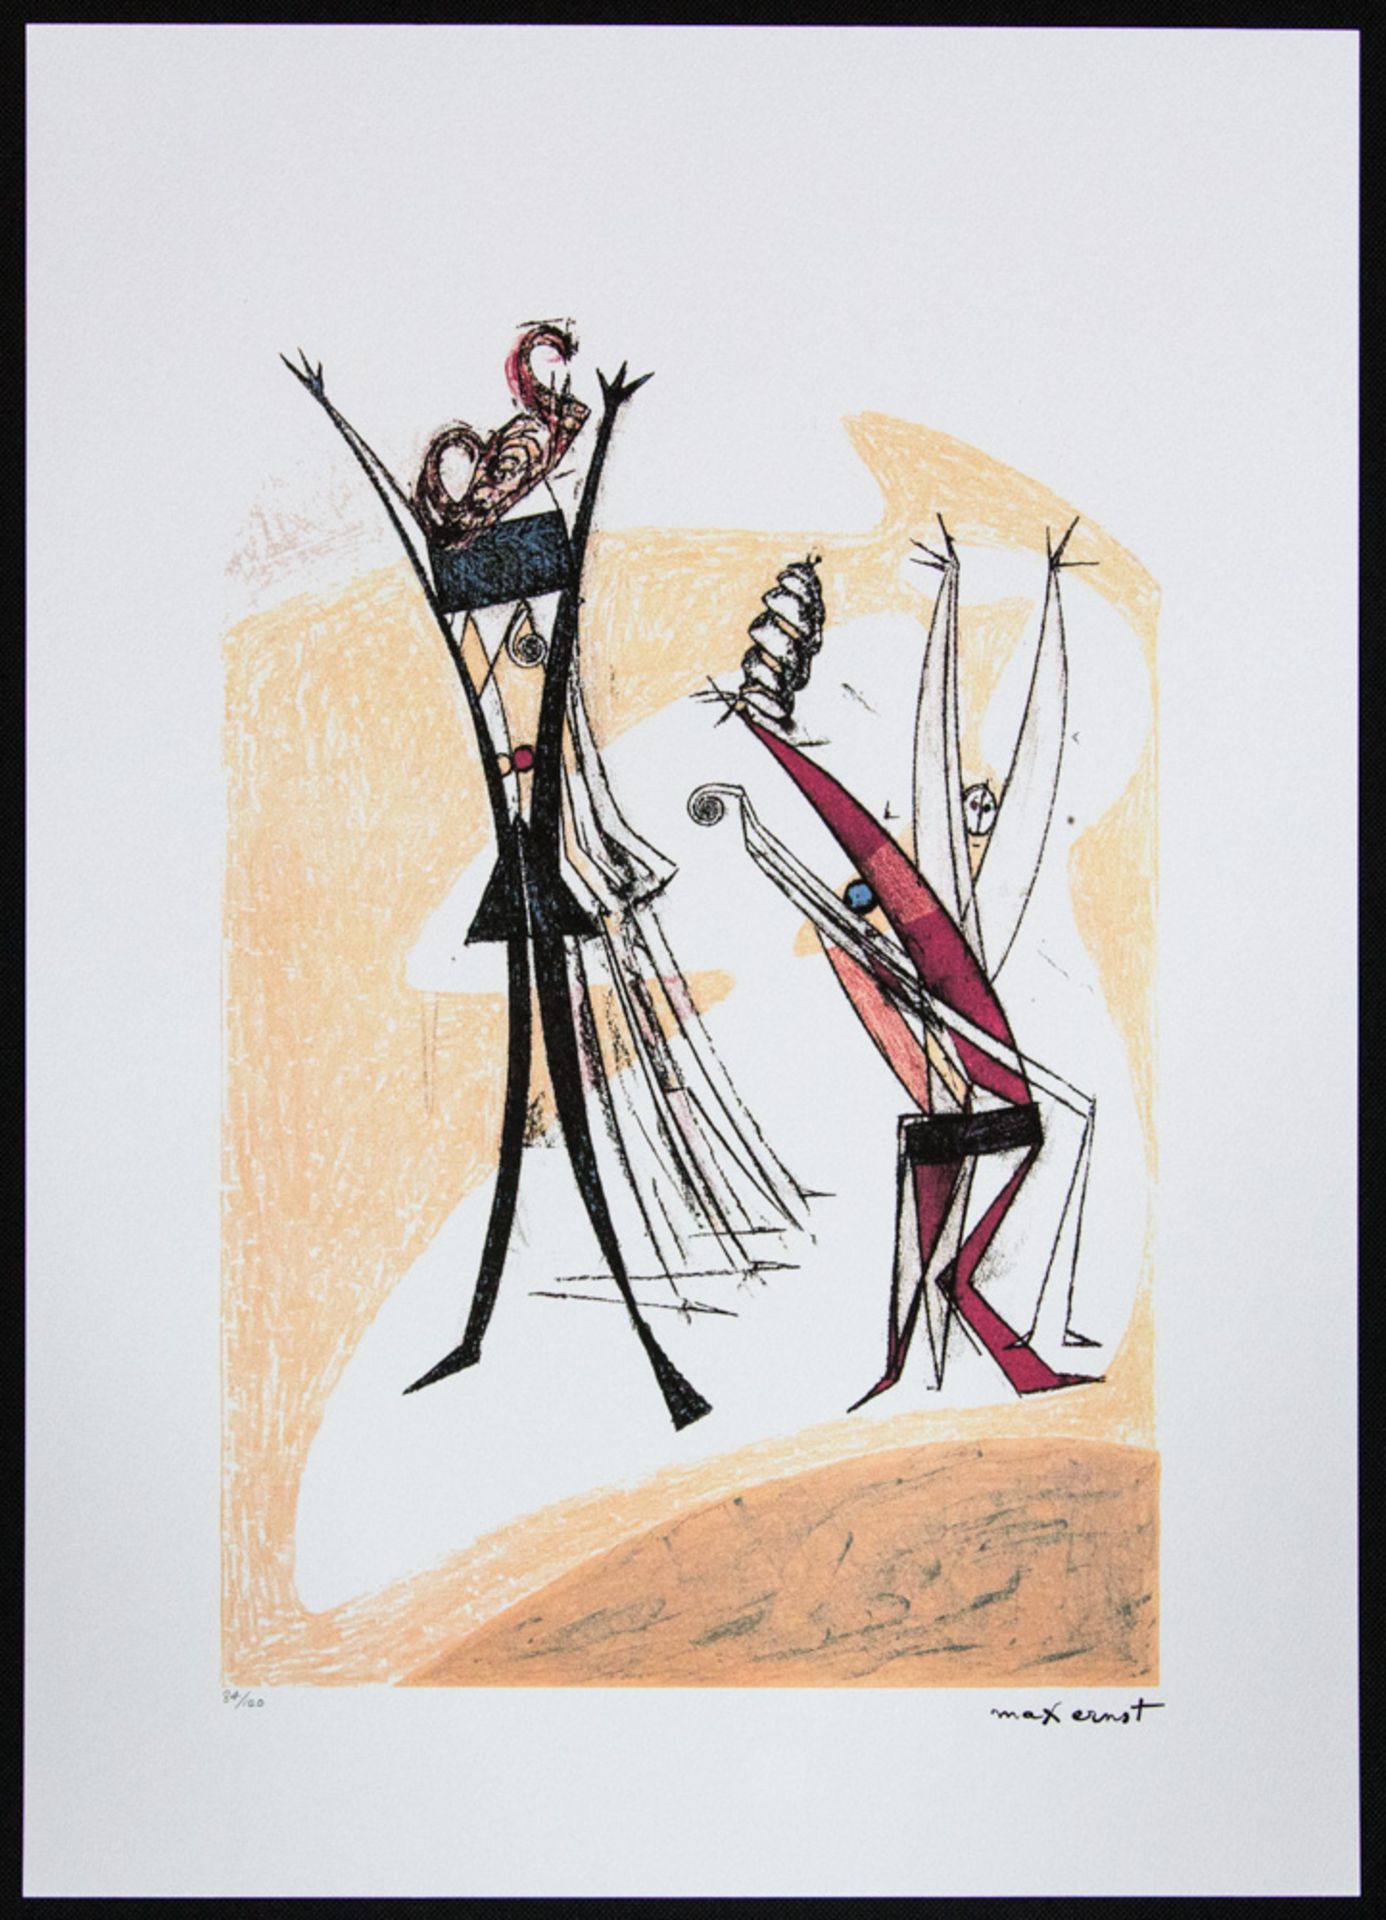 Max Ernst 'Rhythms' - Image 2 of 5